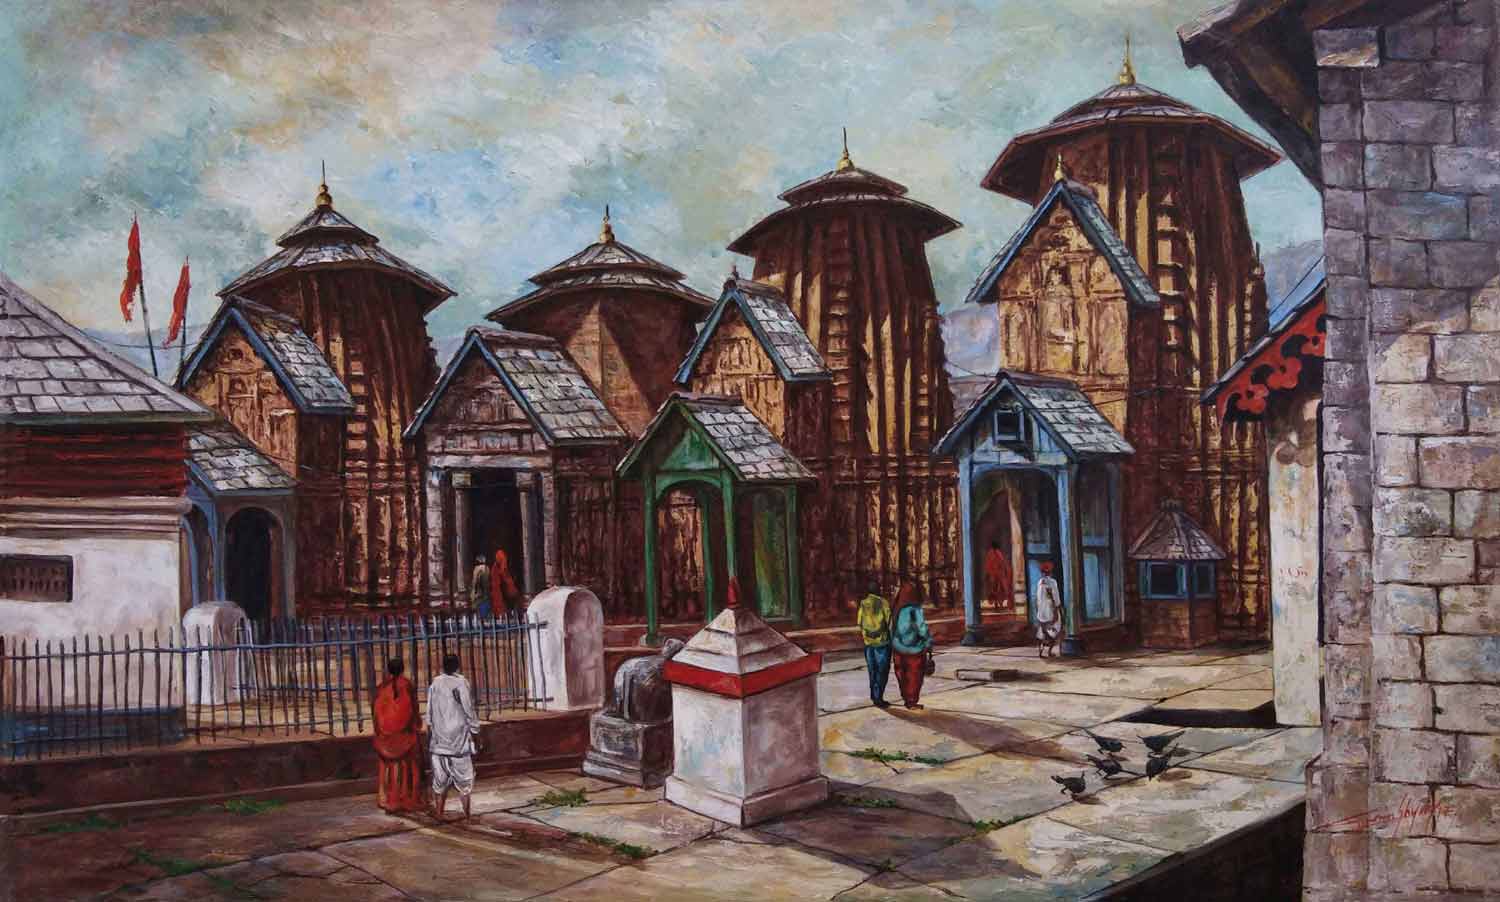 Realism Painting with Acrylic on Canvas "Laxmi Narayan Temple - Himachal Pradesh" art by Ghanshyam Kashyap